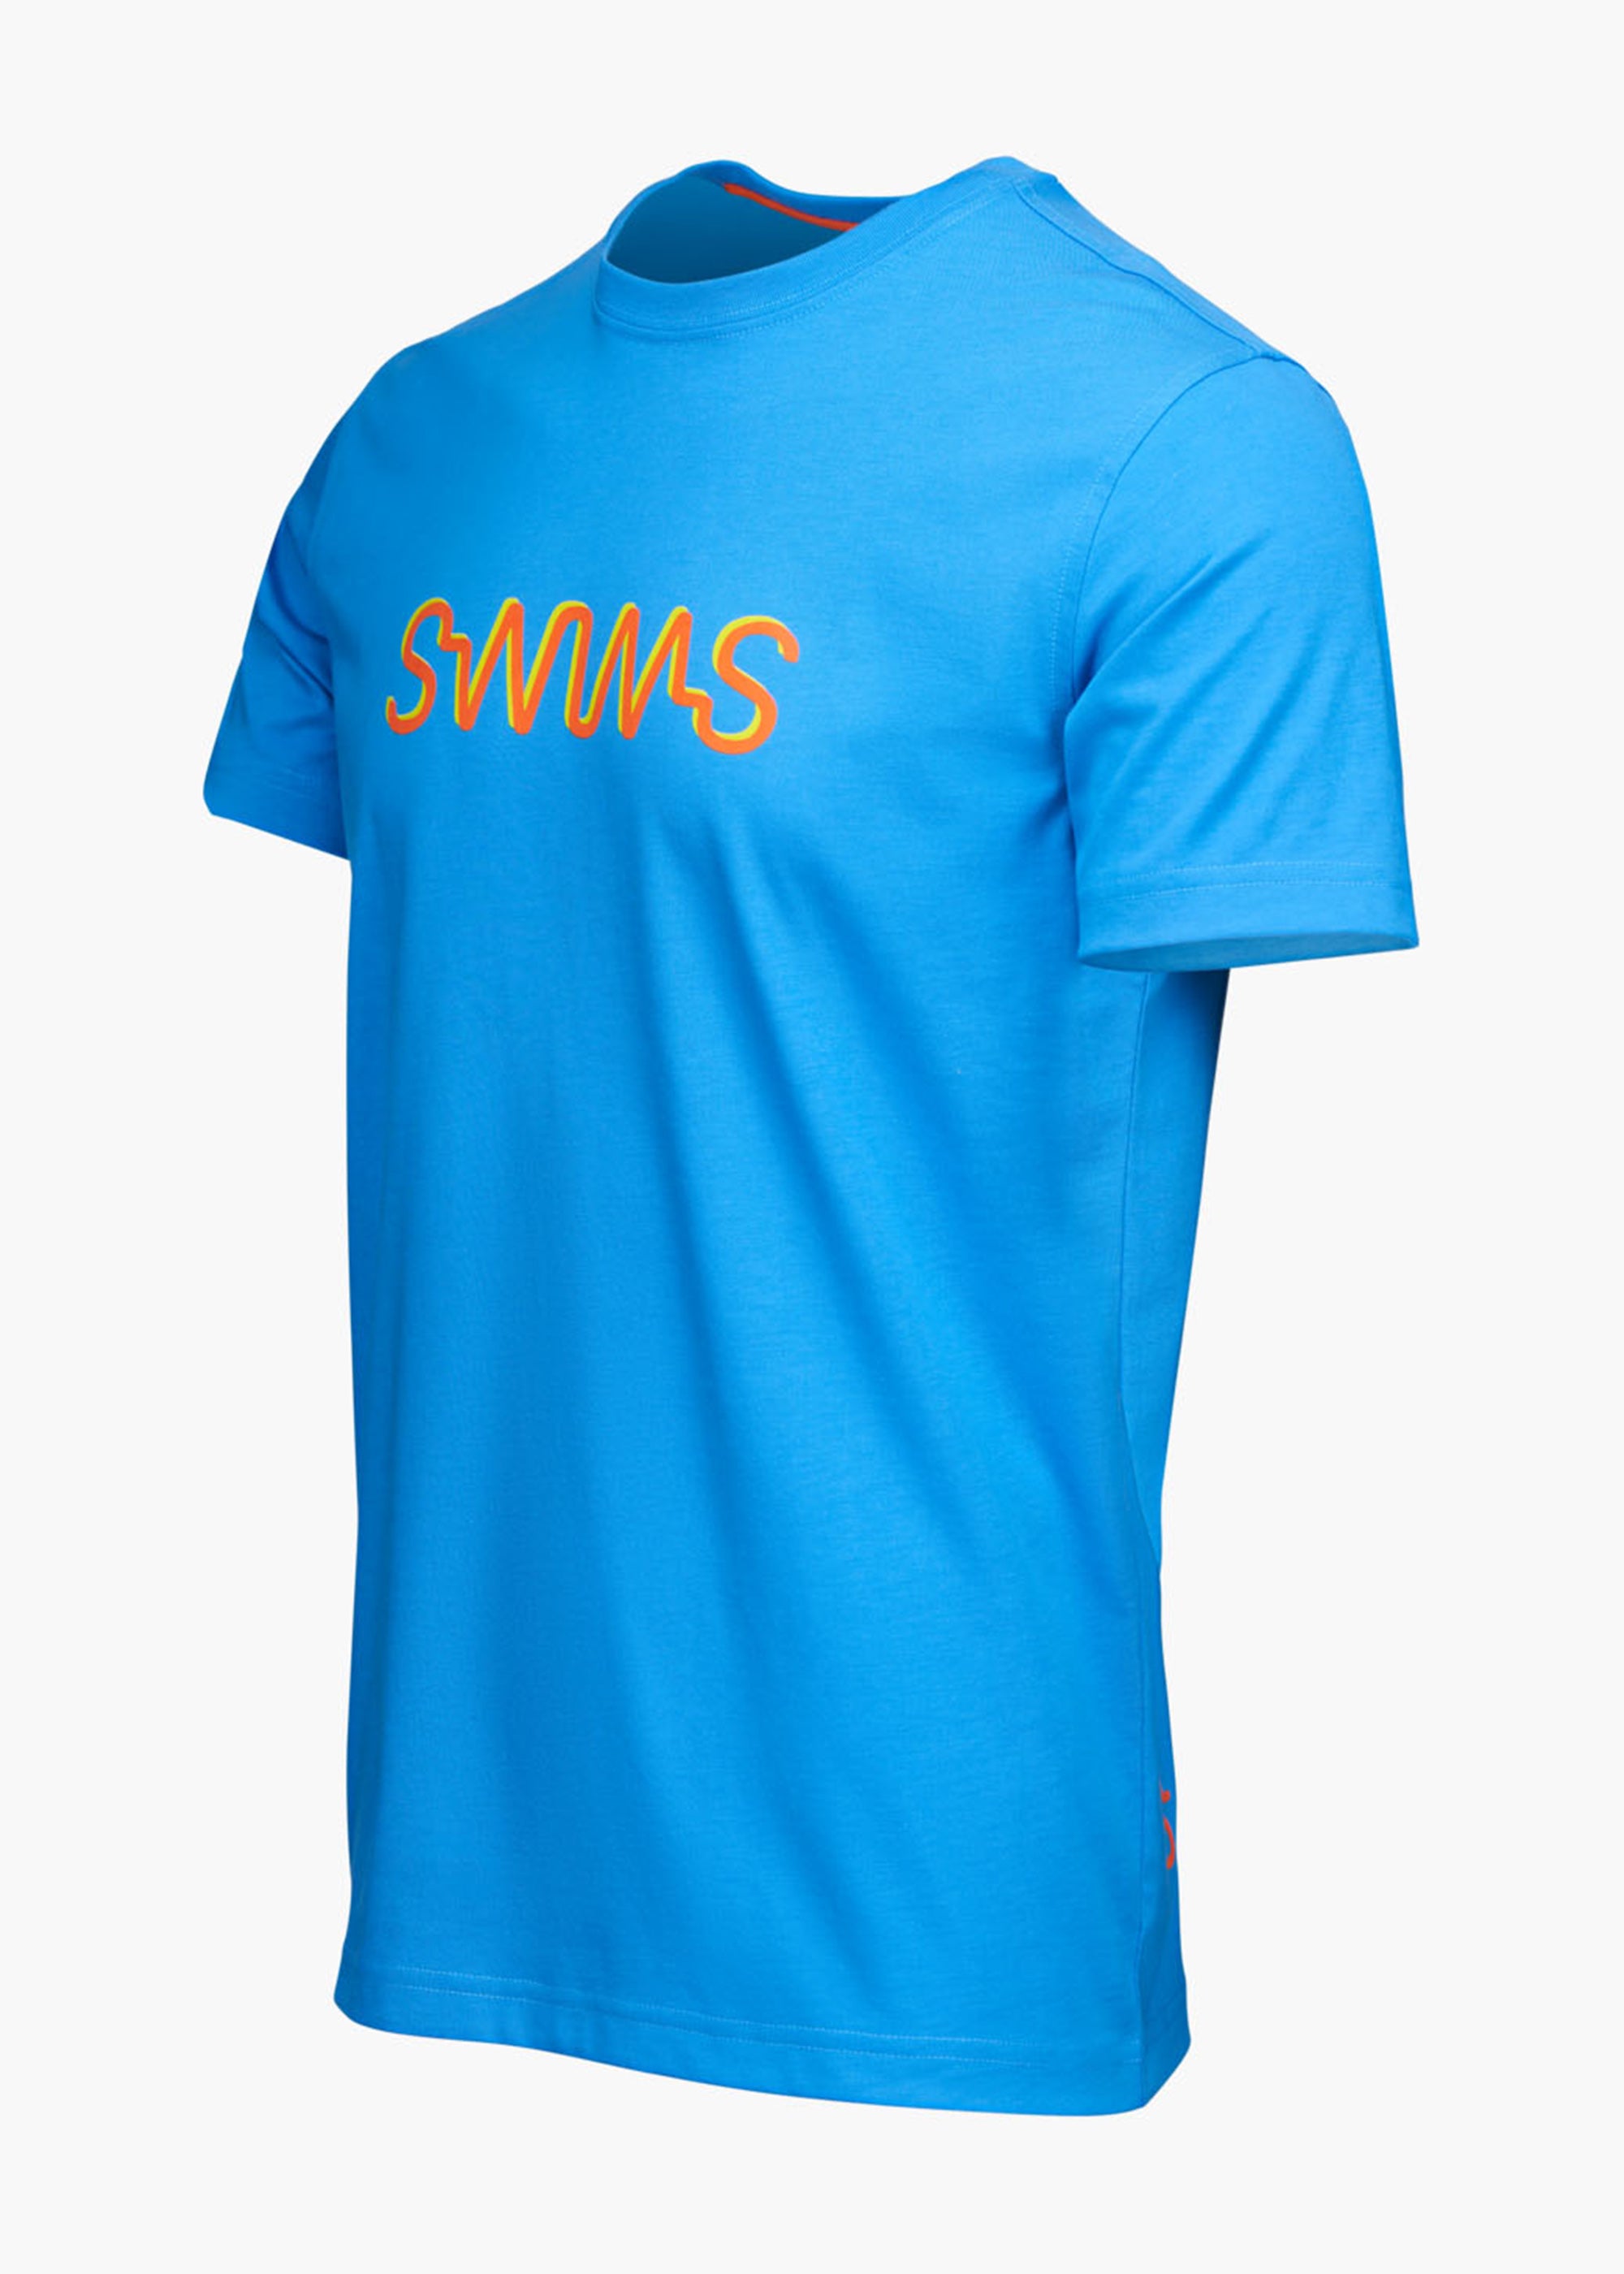 frihed Bil ekstremister Ravello Graphic T Shirt in Sail Blue for Mens | SWIMS | SWIMS